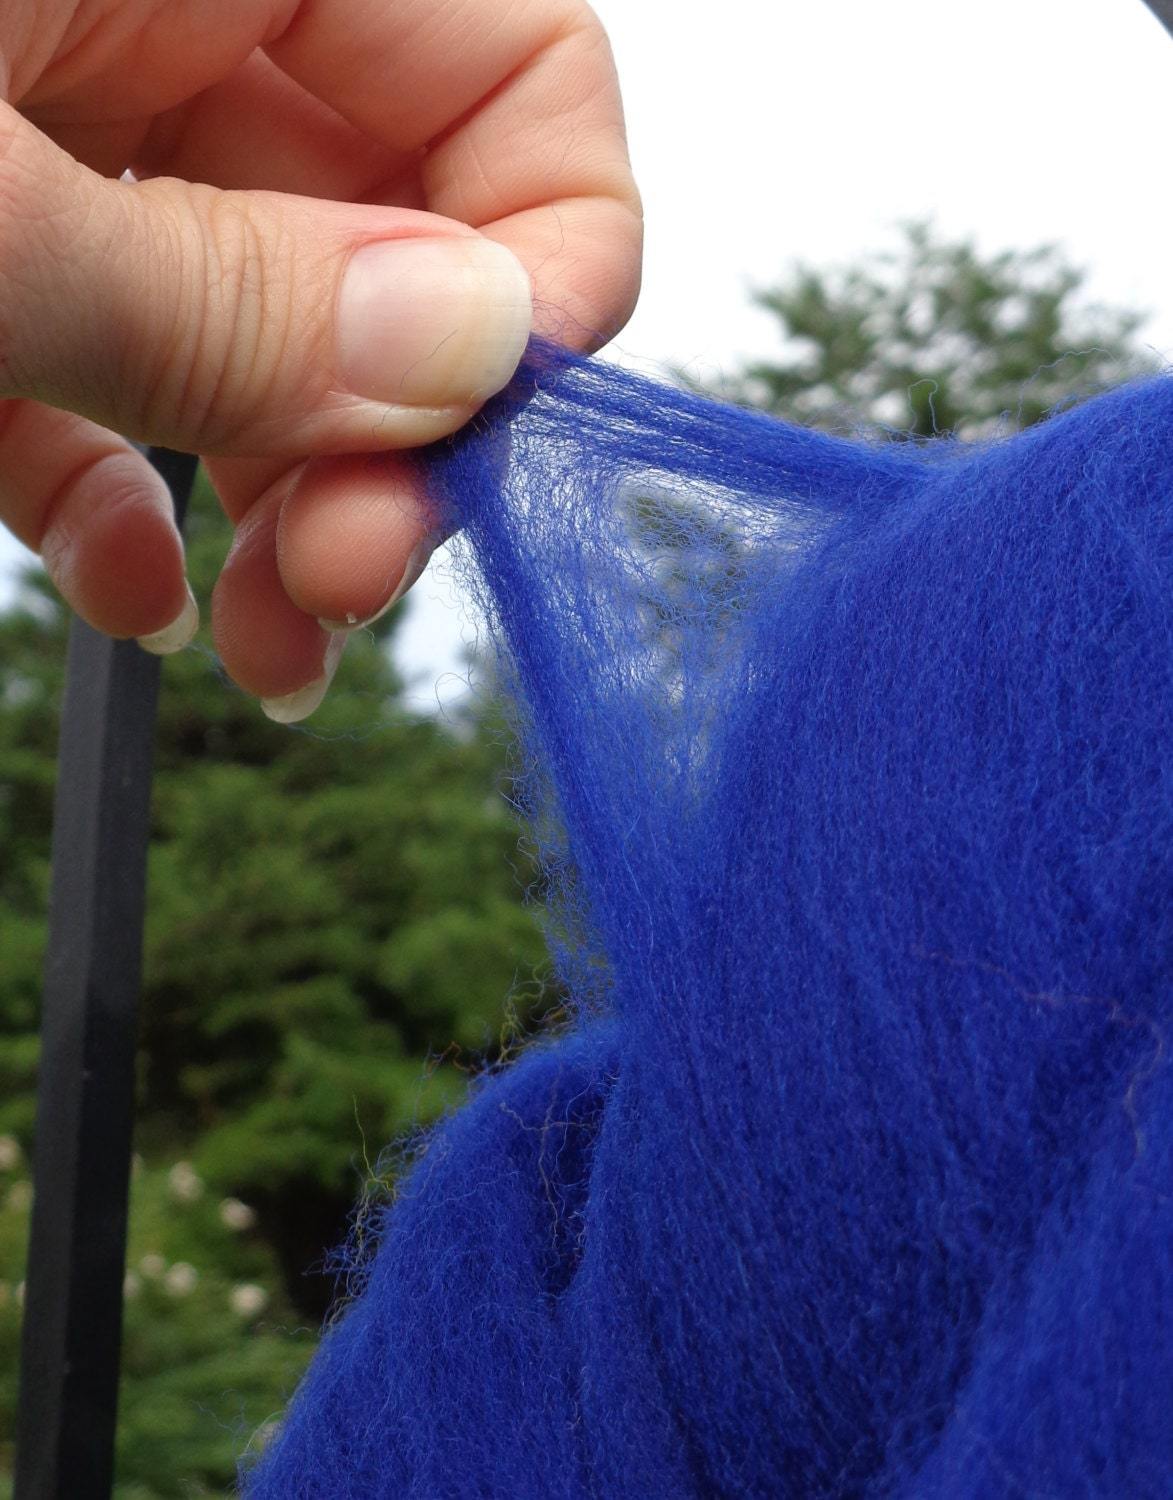 4 oz Sapphire  Blue Merino Wool Top Roving Fiber Spinning, Felting , weaving, dolls, Crafts USA -SALE!